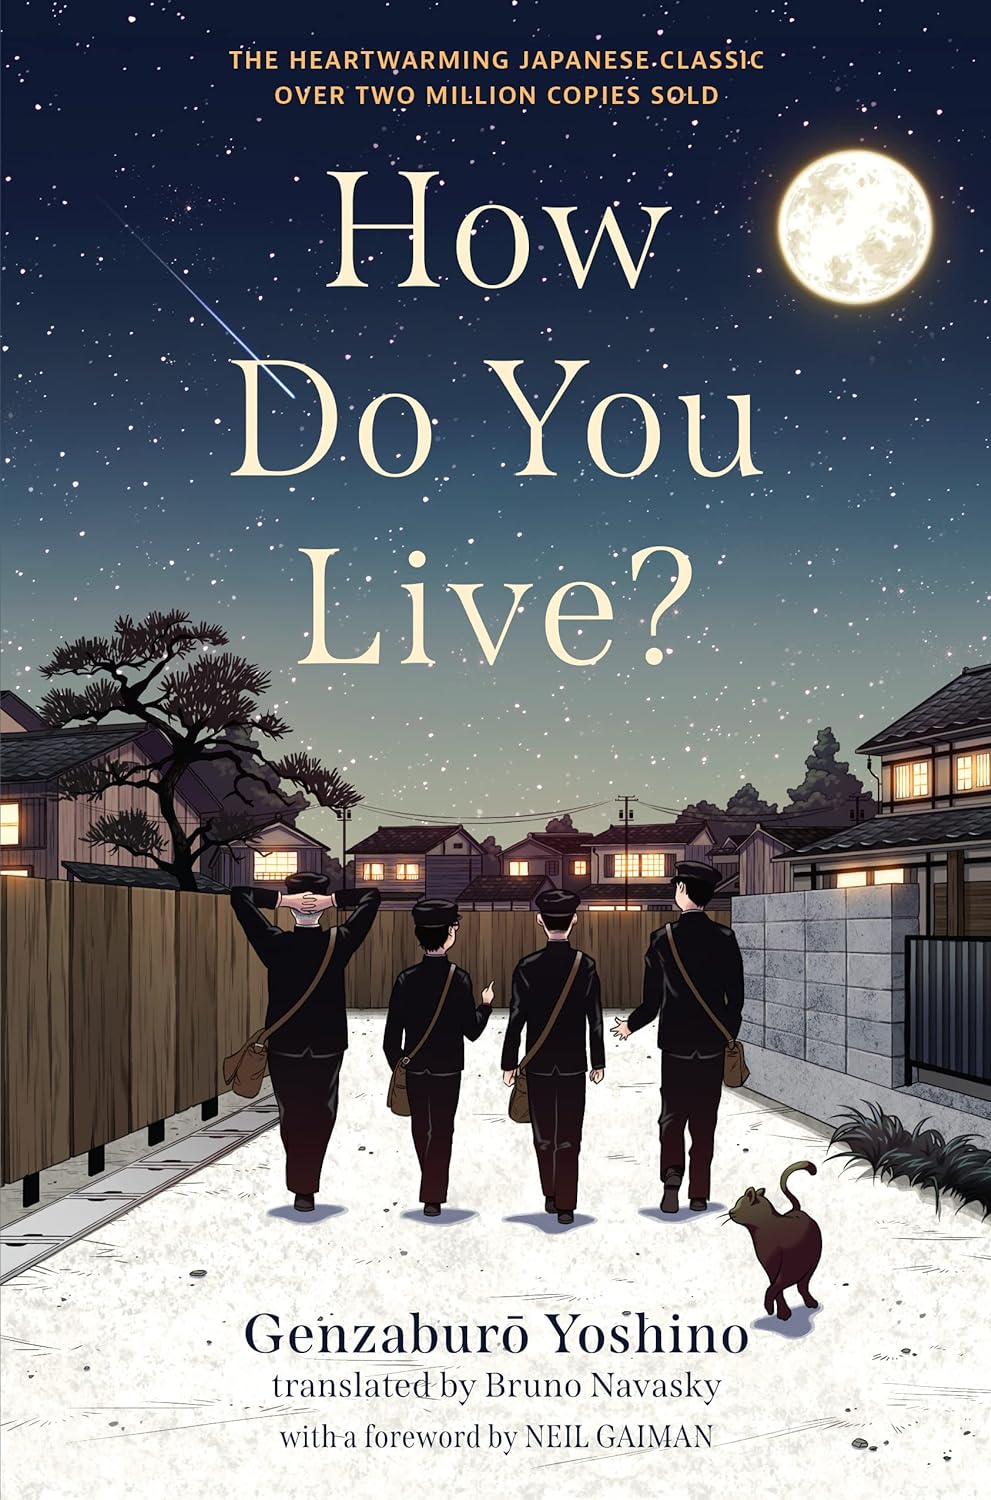 Genzaburo Yoshino, Neil Gaiman, Bruno Navasky: How Do You Live? (2021, Algonquin Books of Chapel Hill)